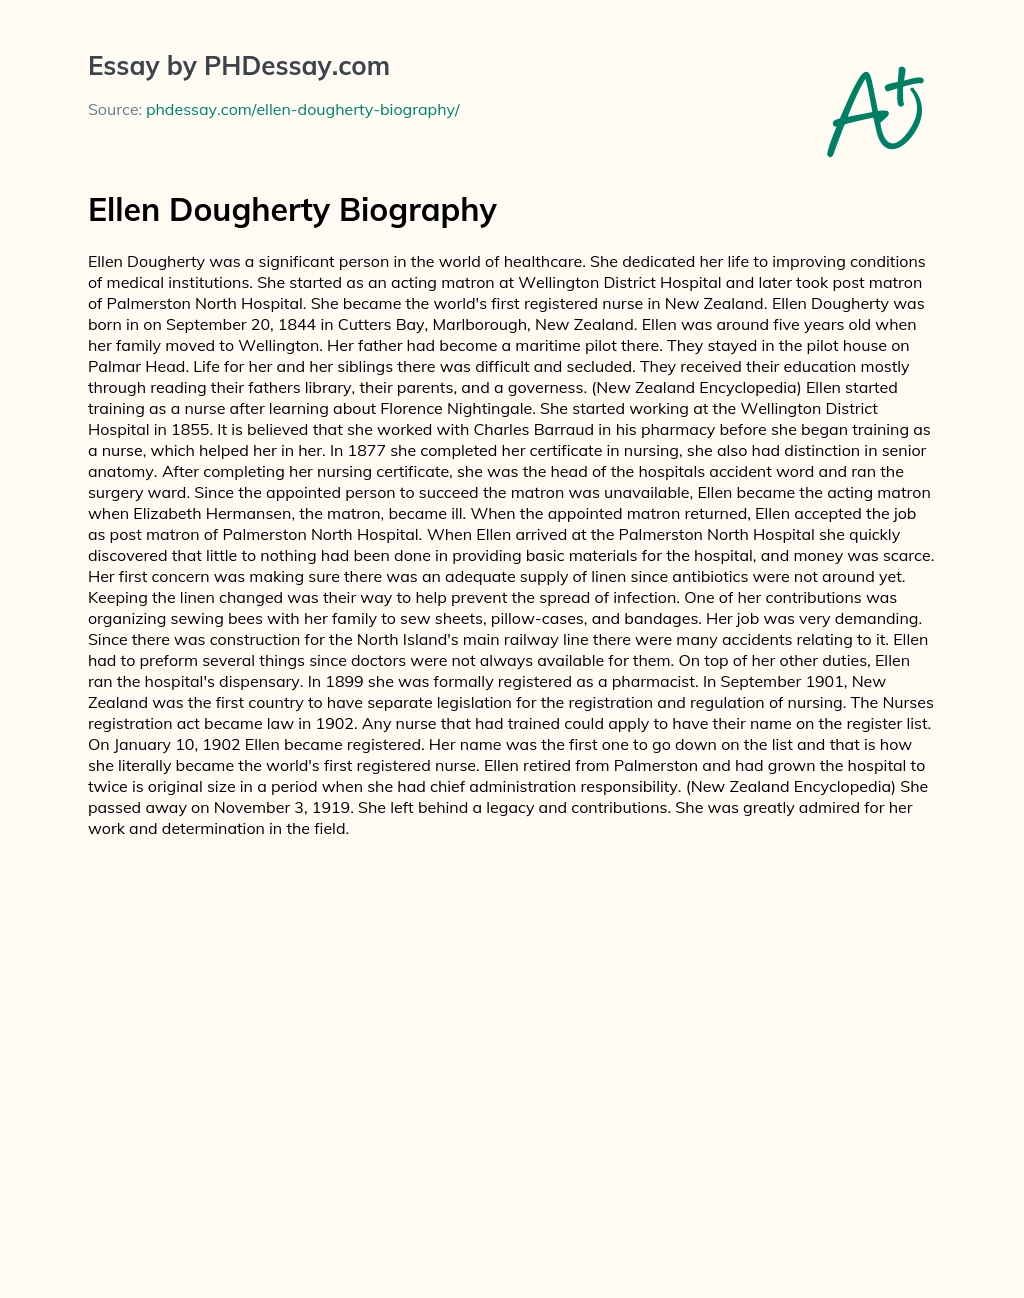 Ellen Dougherty Biography essay